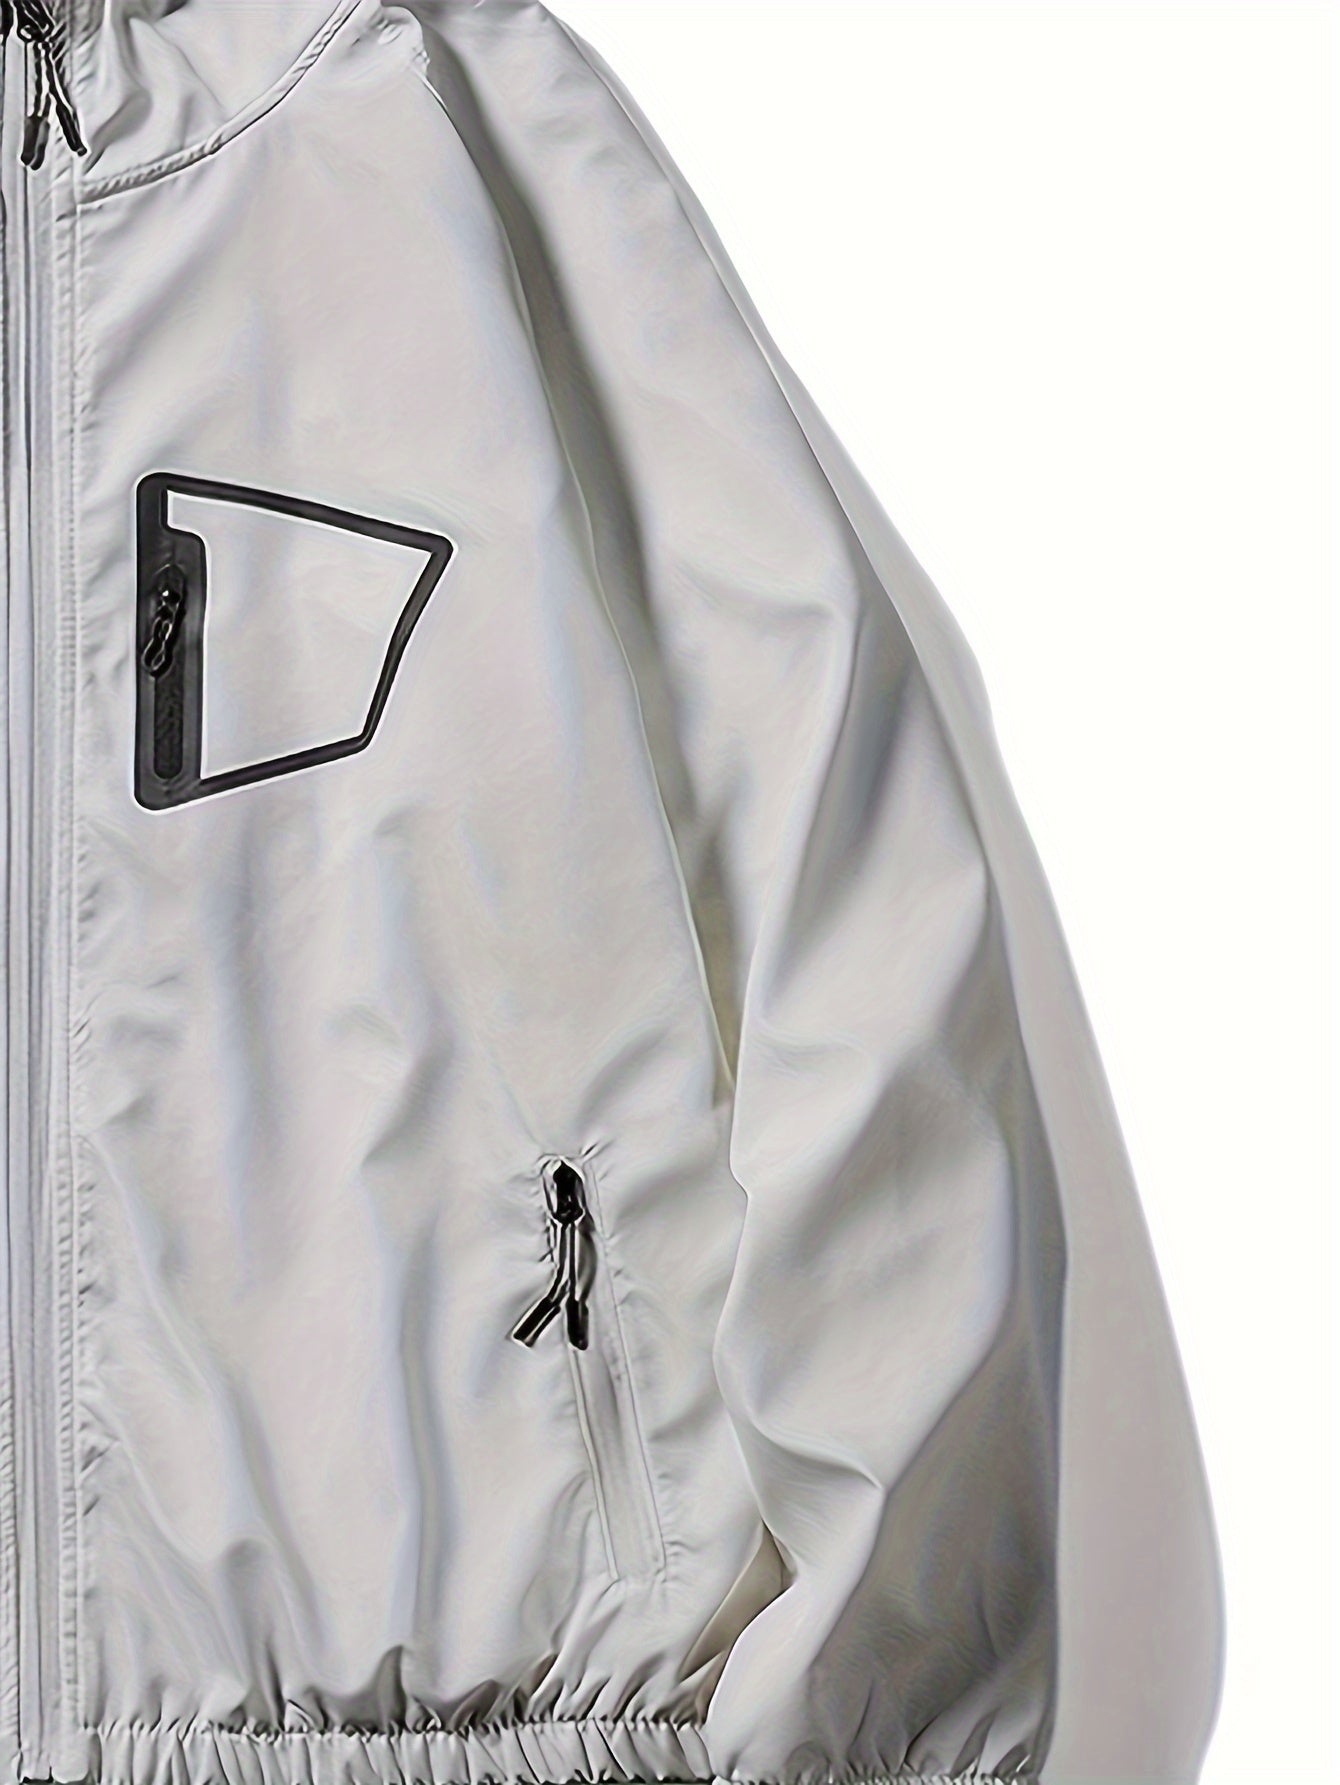 Versatile Men's Zip-Up Hooded Jacket - Durable Polyester, Spring/Fall, Multi-Pocket Design